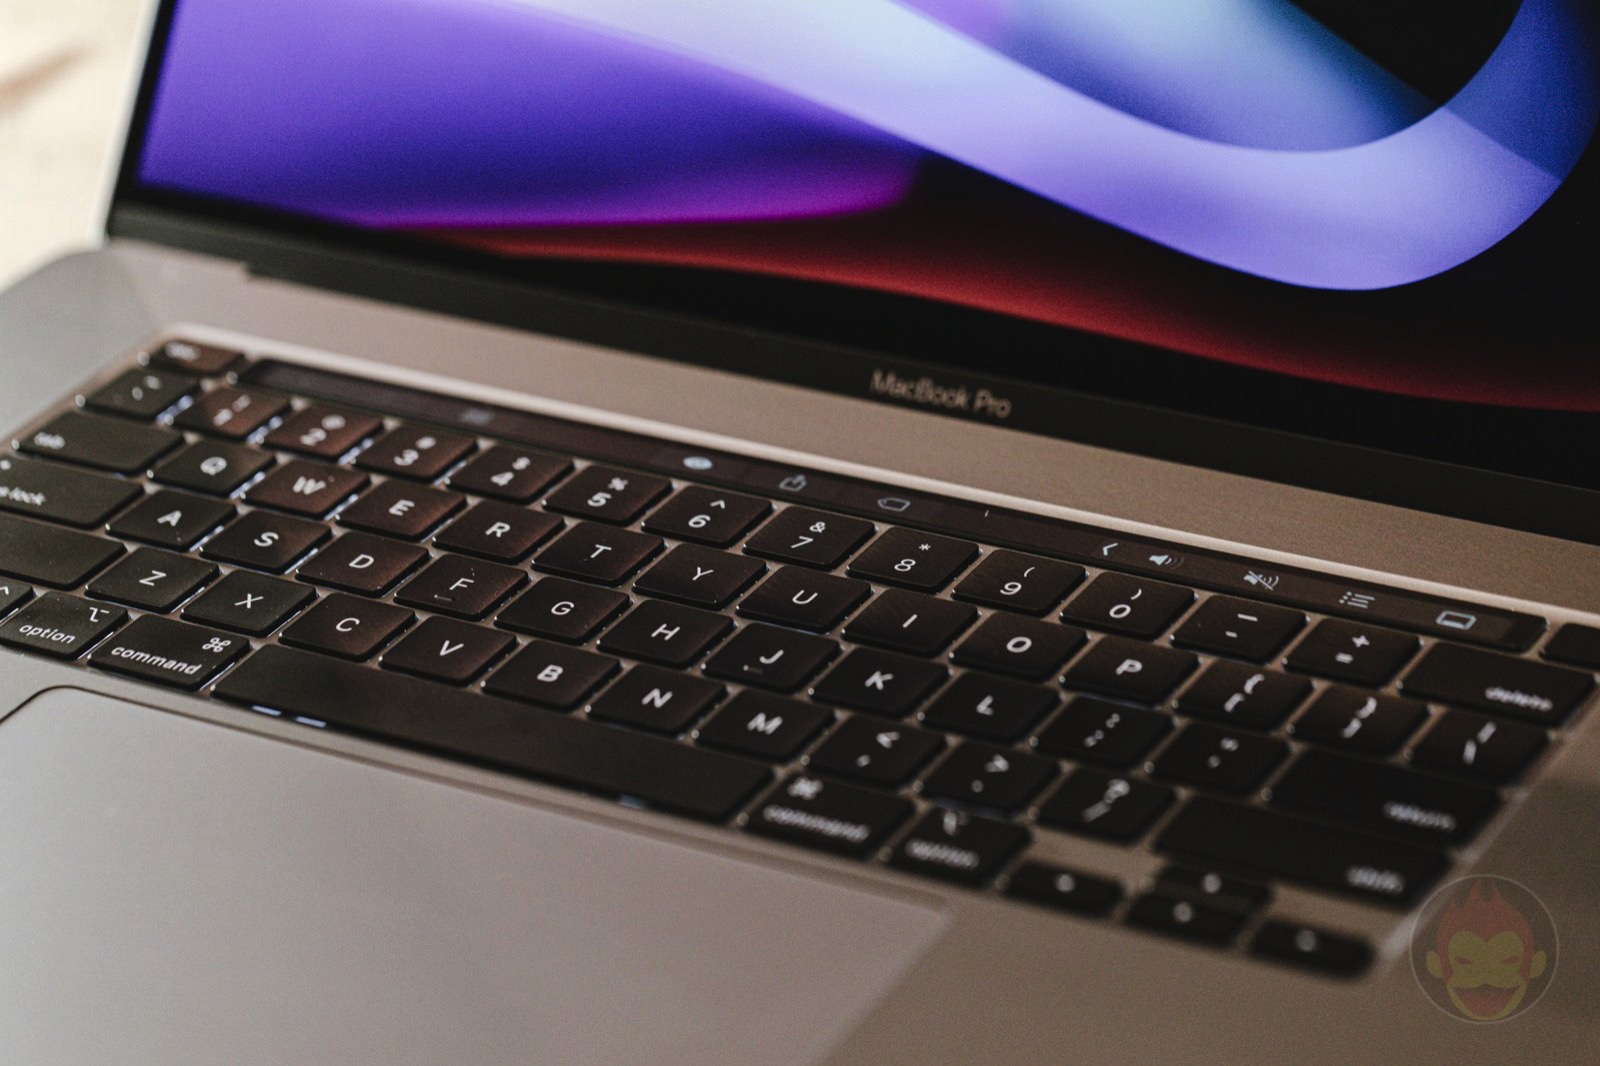 MacBookPro-16inch-is-cheaper-on-amazon-01.jpg